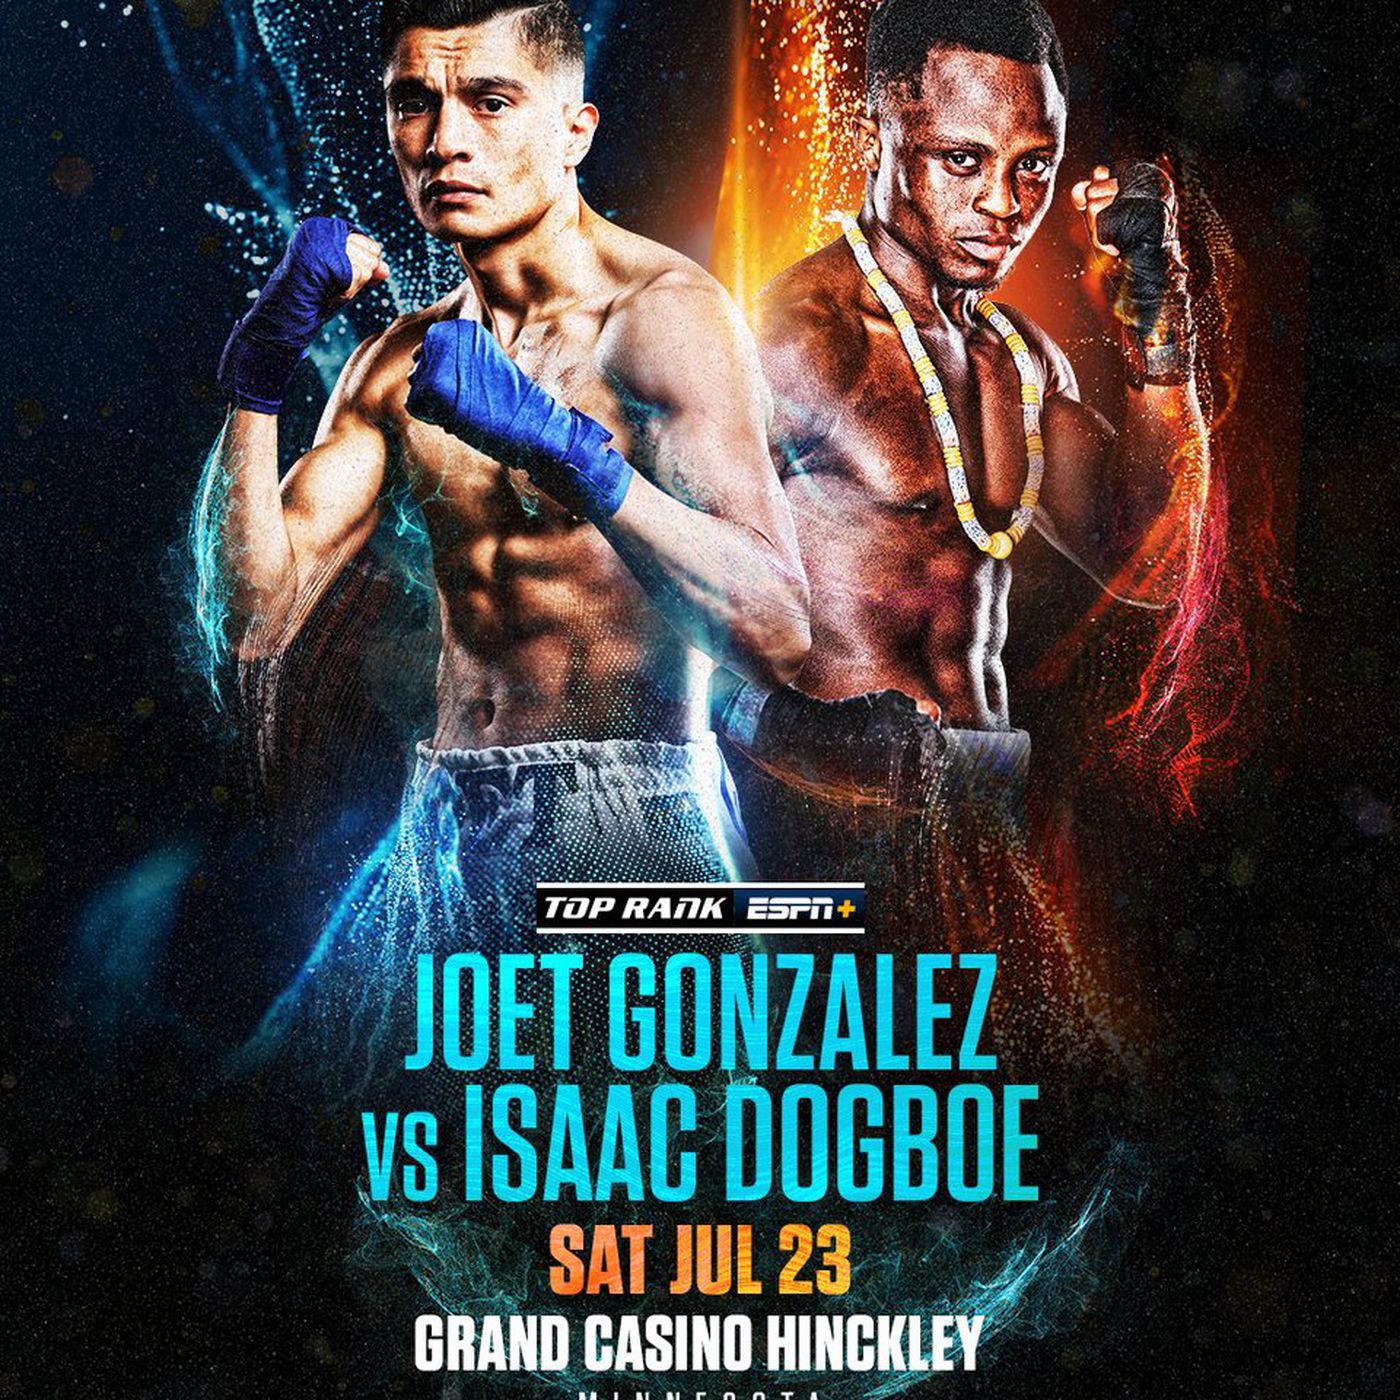 دانلود مبارزه بوکس : Isaac dogboe VS Joet Gonzalez